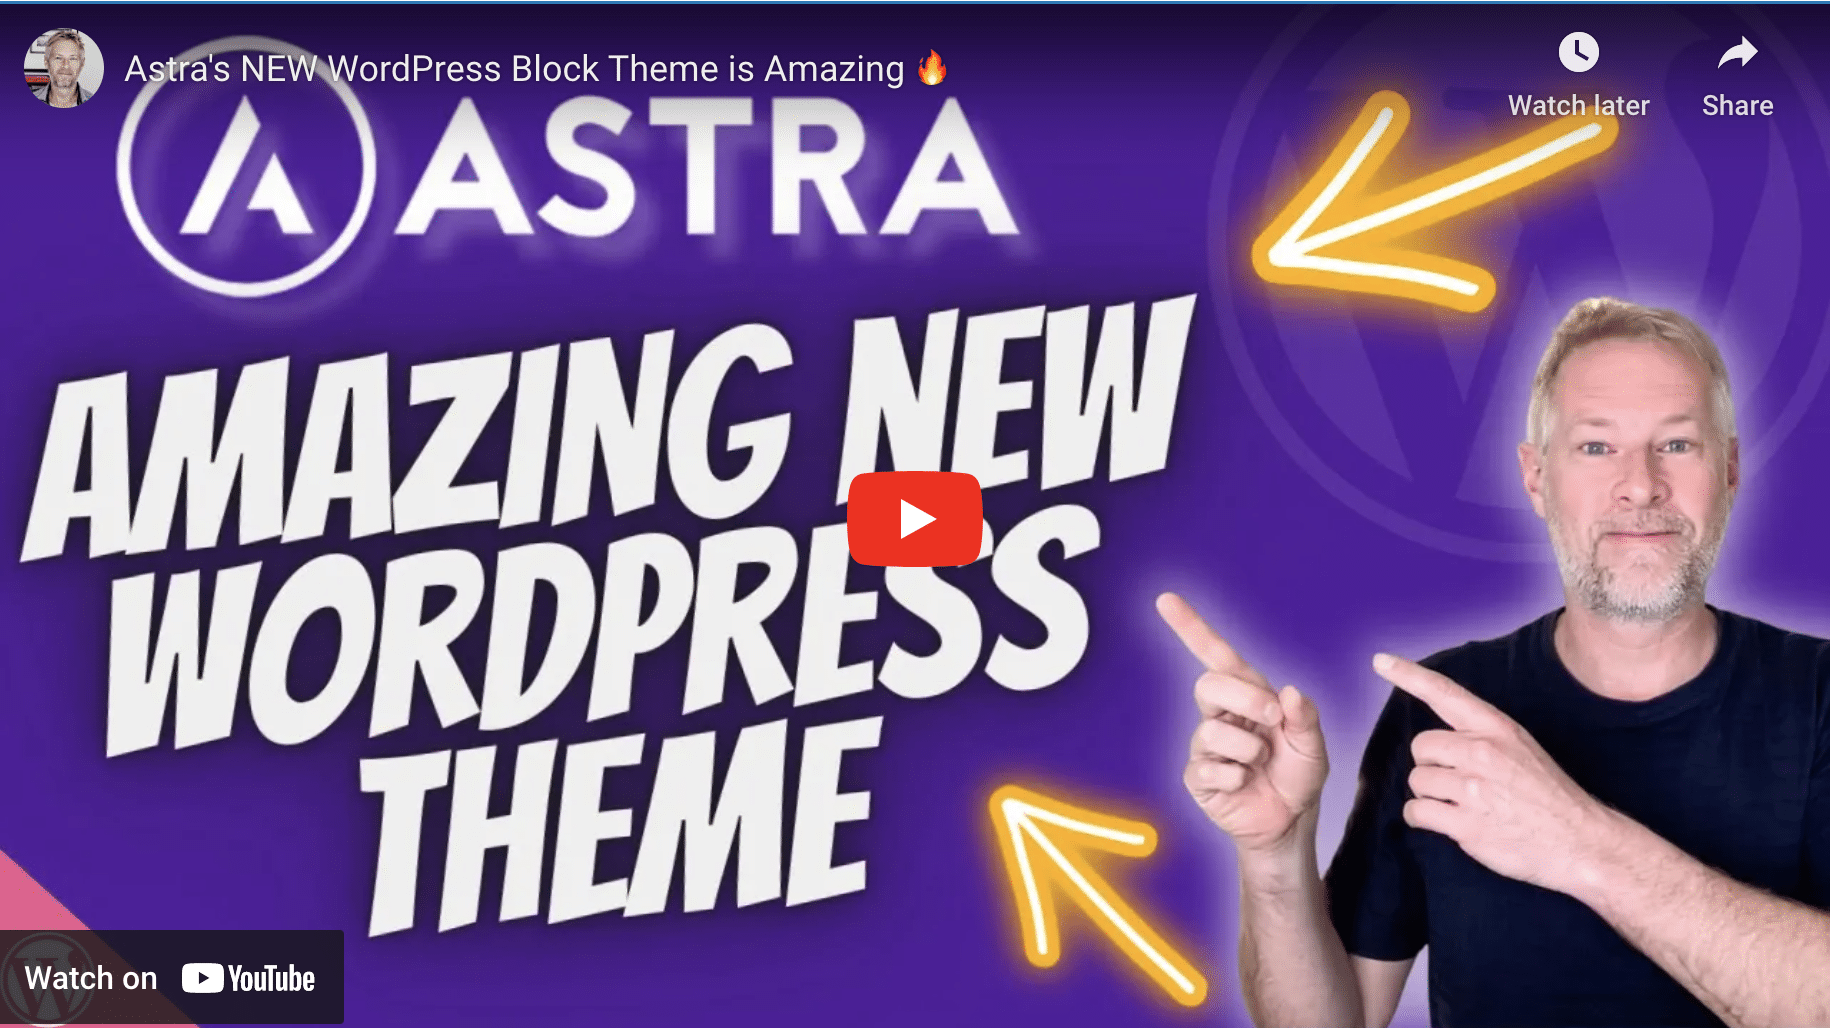 Astra’s NEW WordPress Block Theme is Amazing